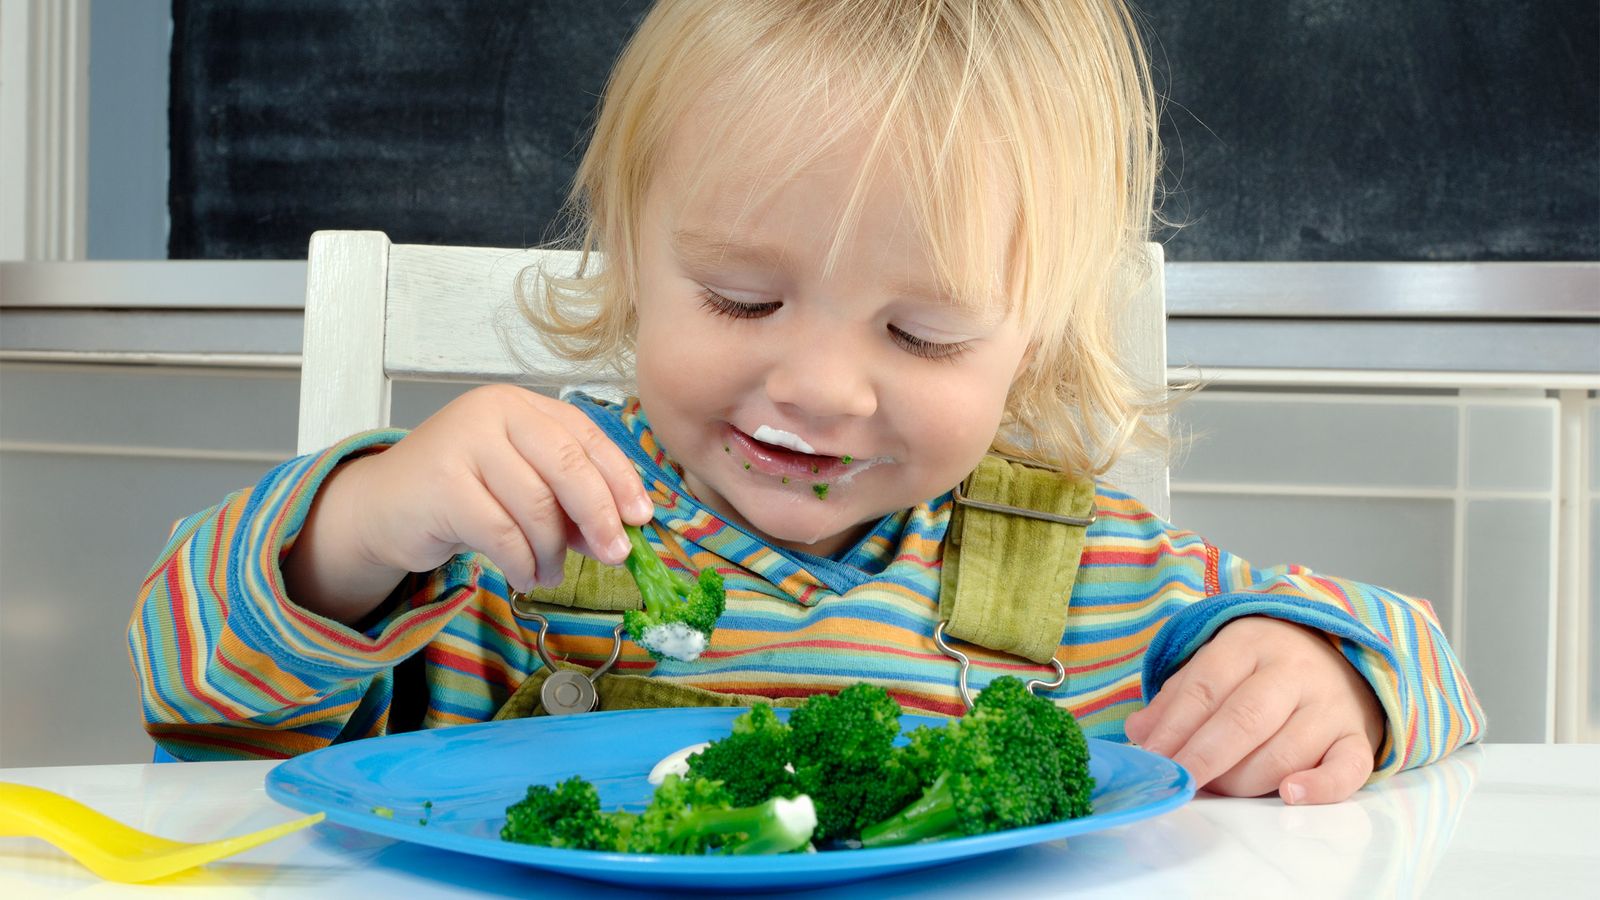 Gesunde Ernährung im Kindergarten